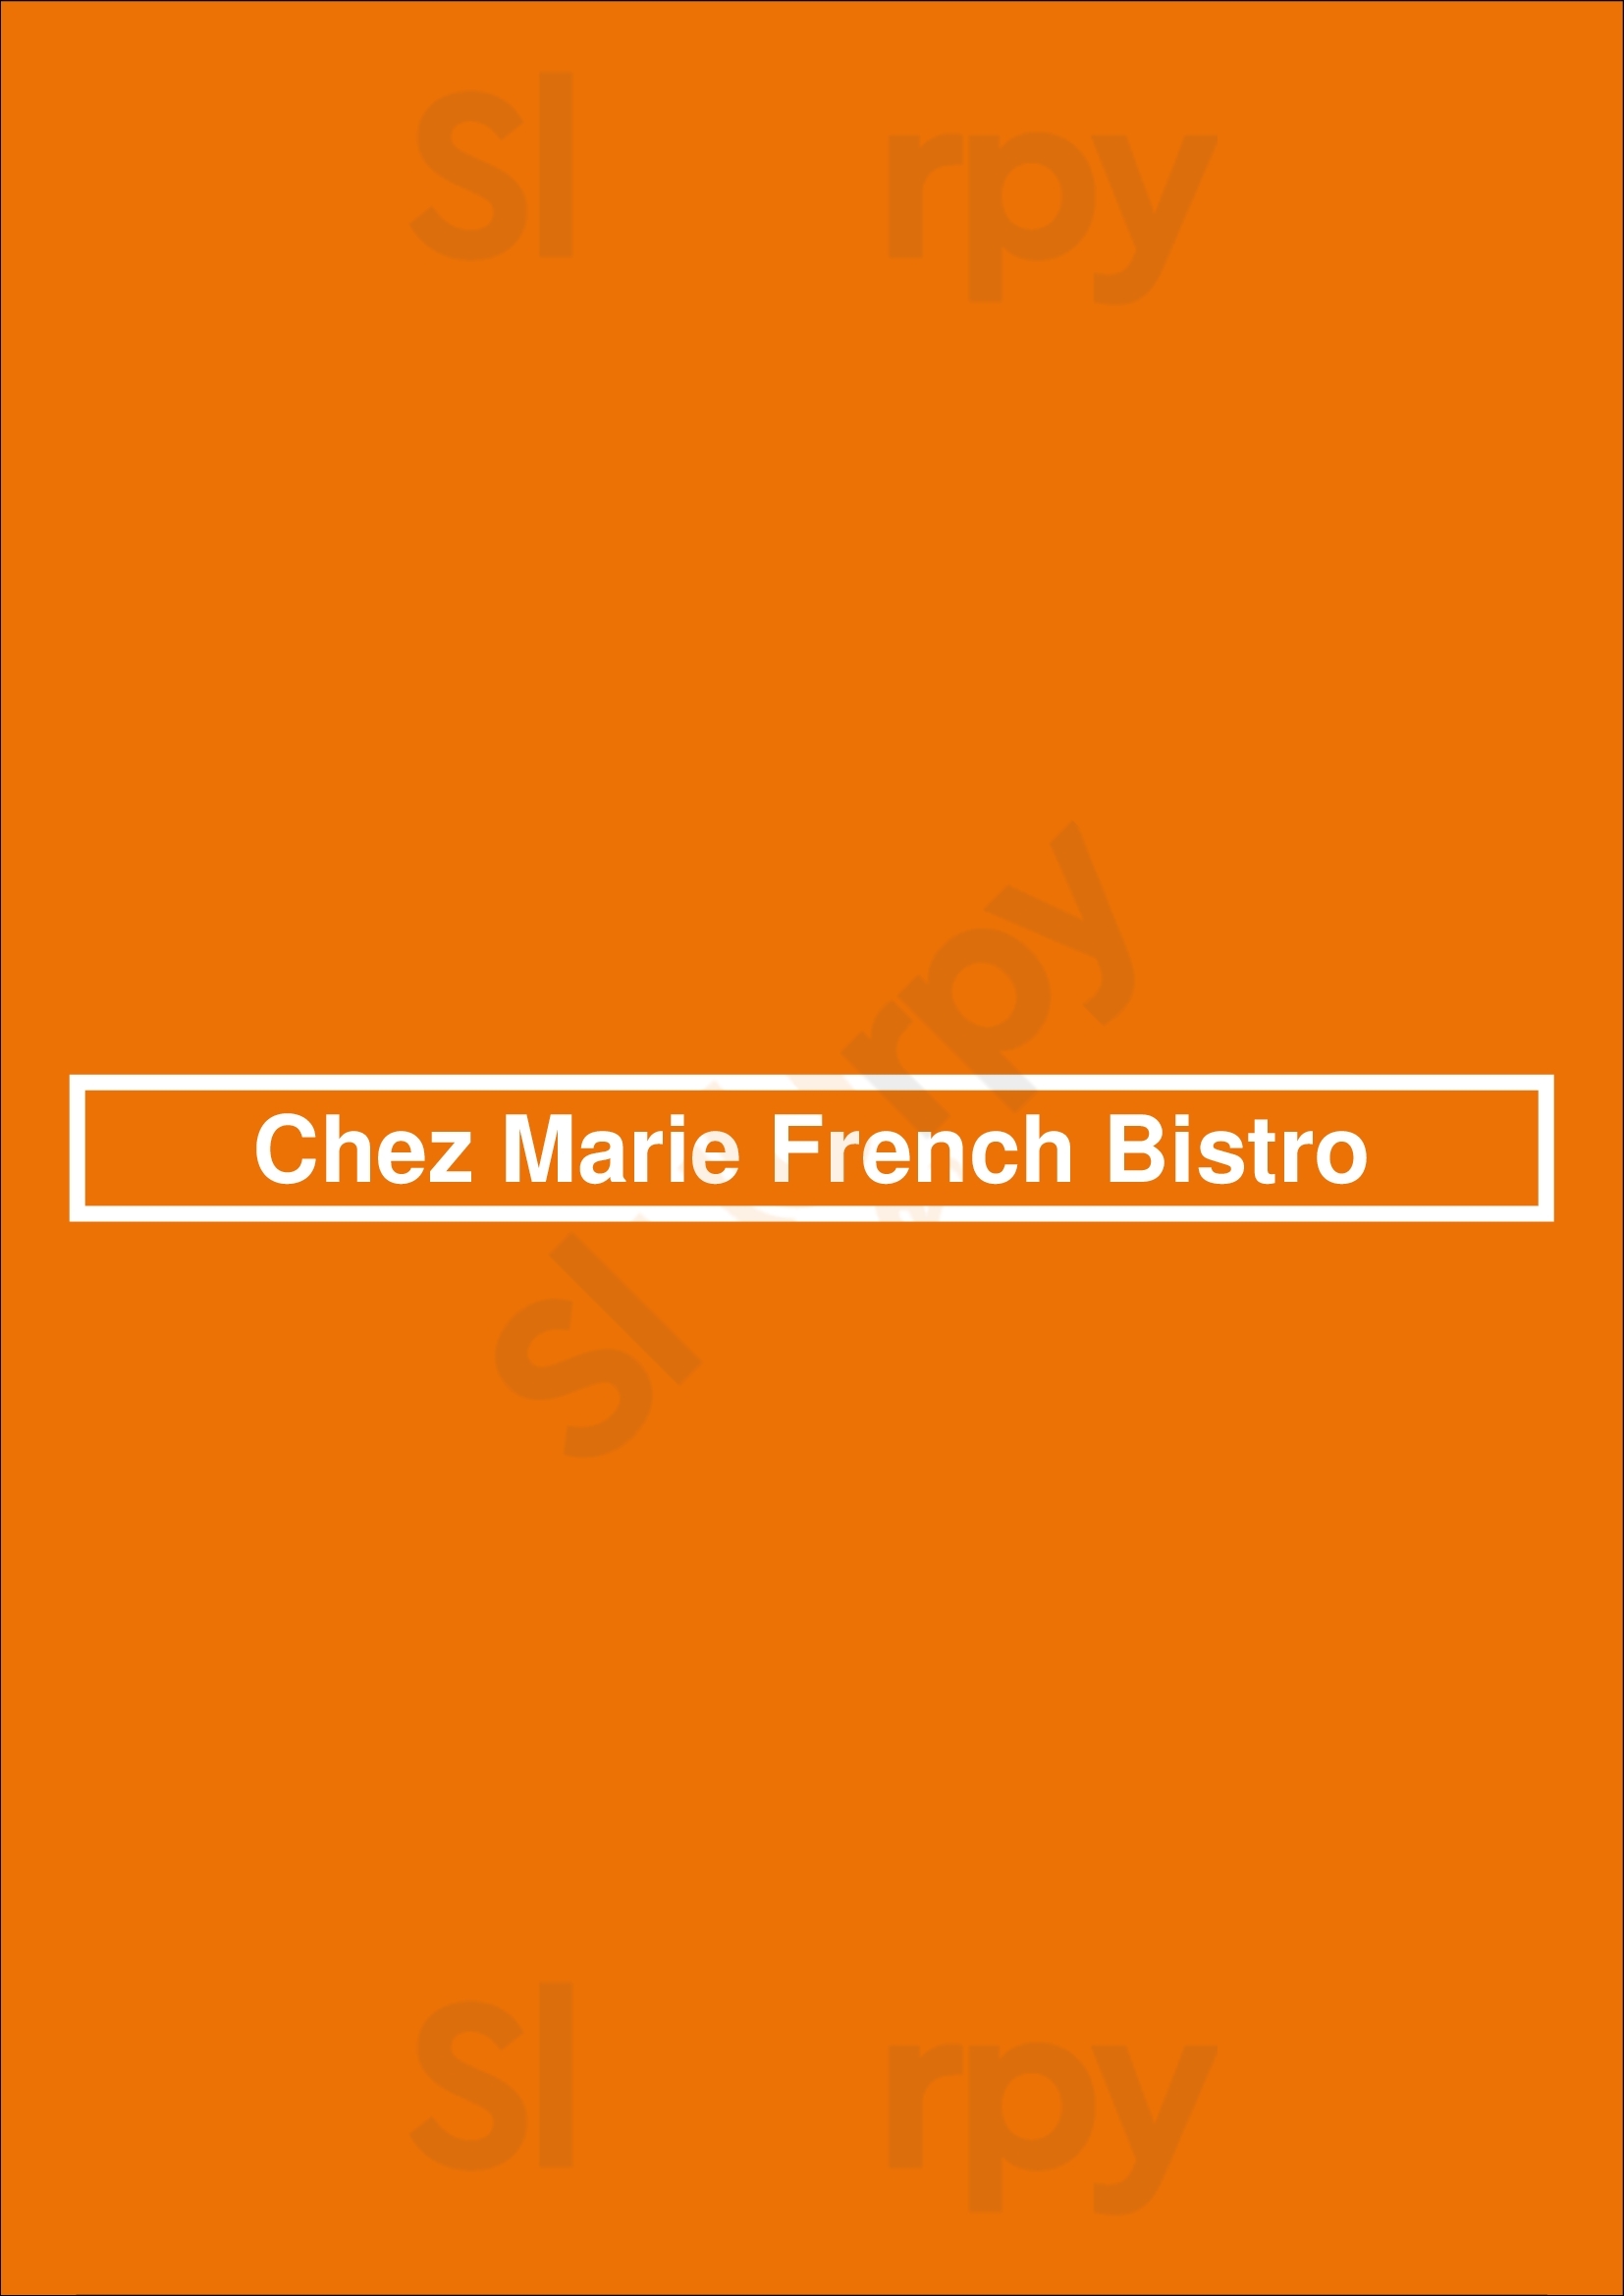 Chez Marie French Bistro Boca Raton Menu - 1